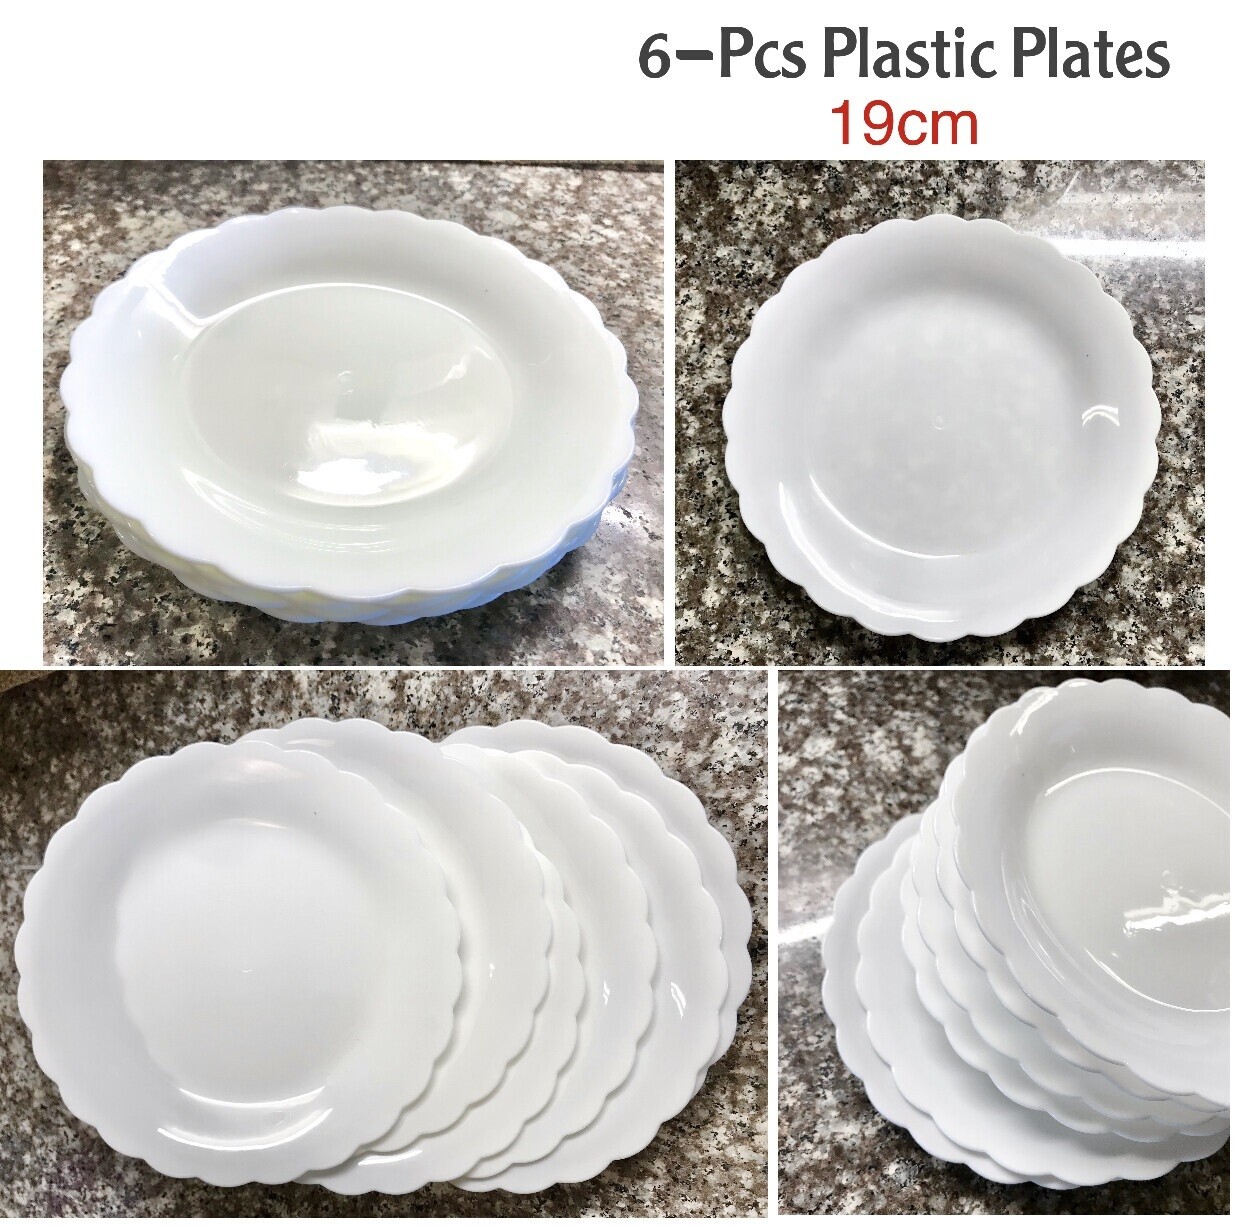 6-Pcs Plastic Plates (19cm)